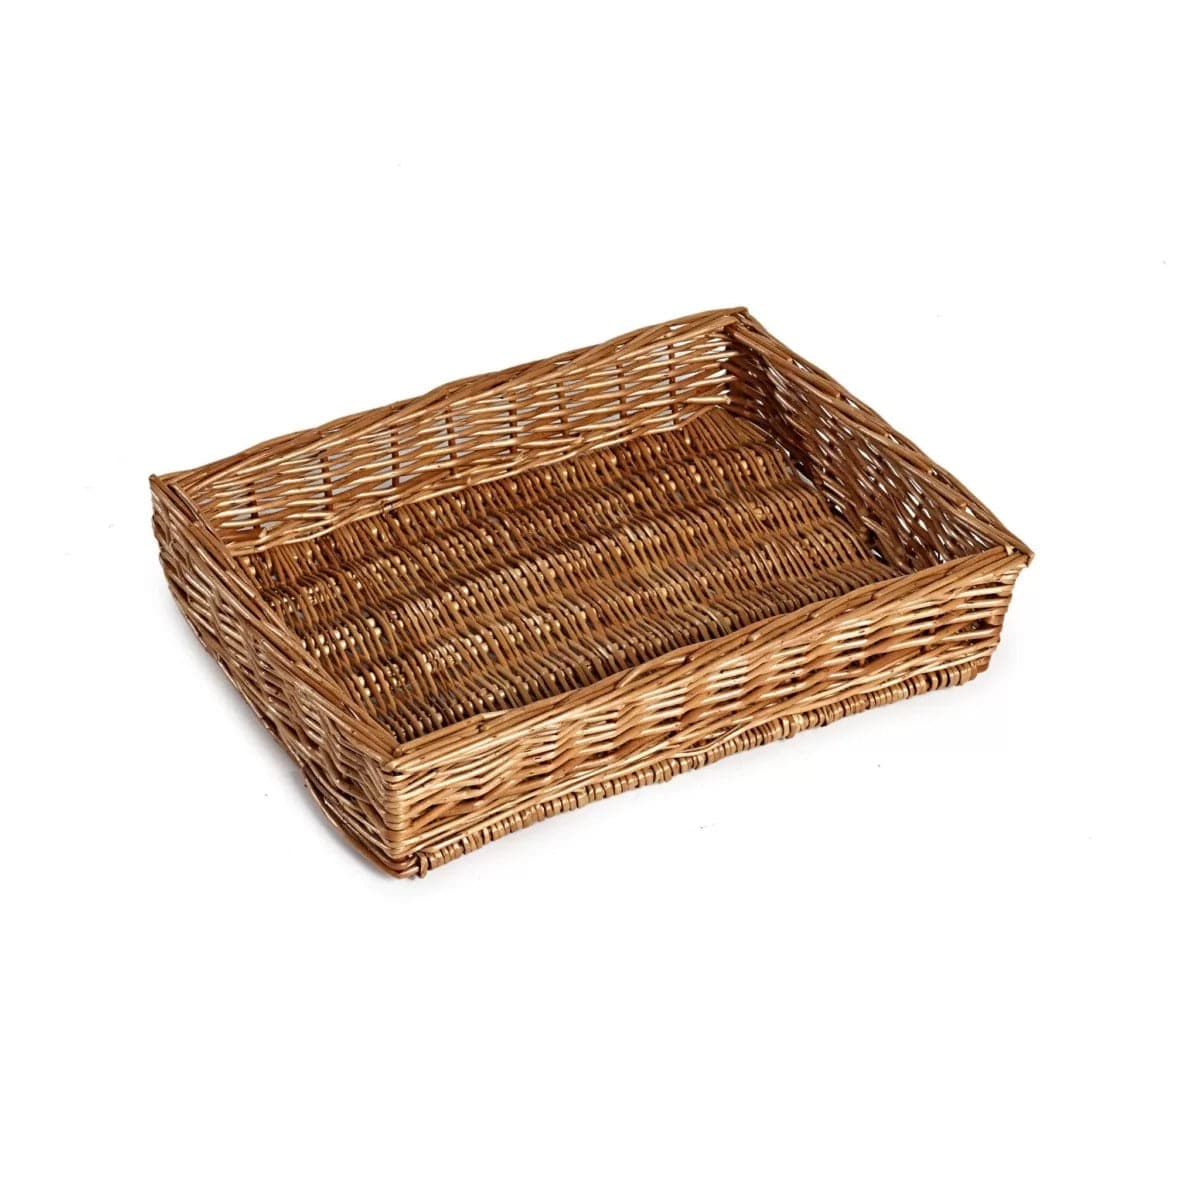 Wicker display basket 40cm